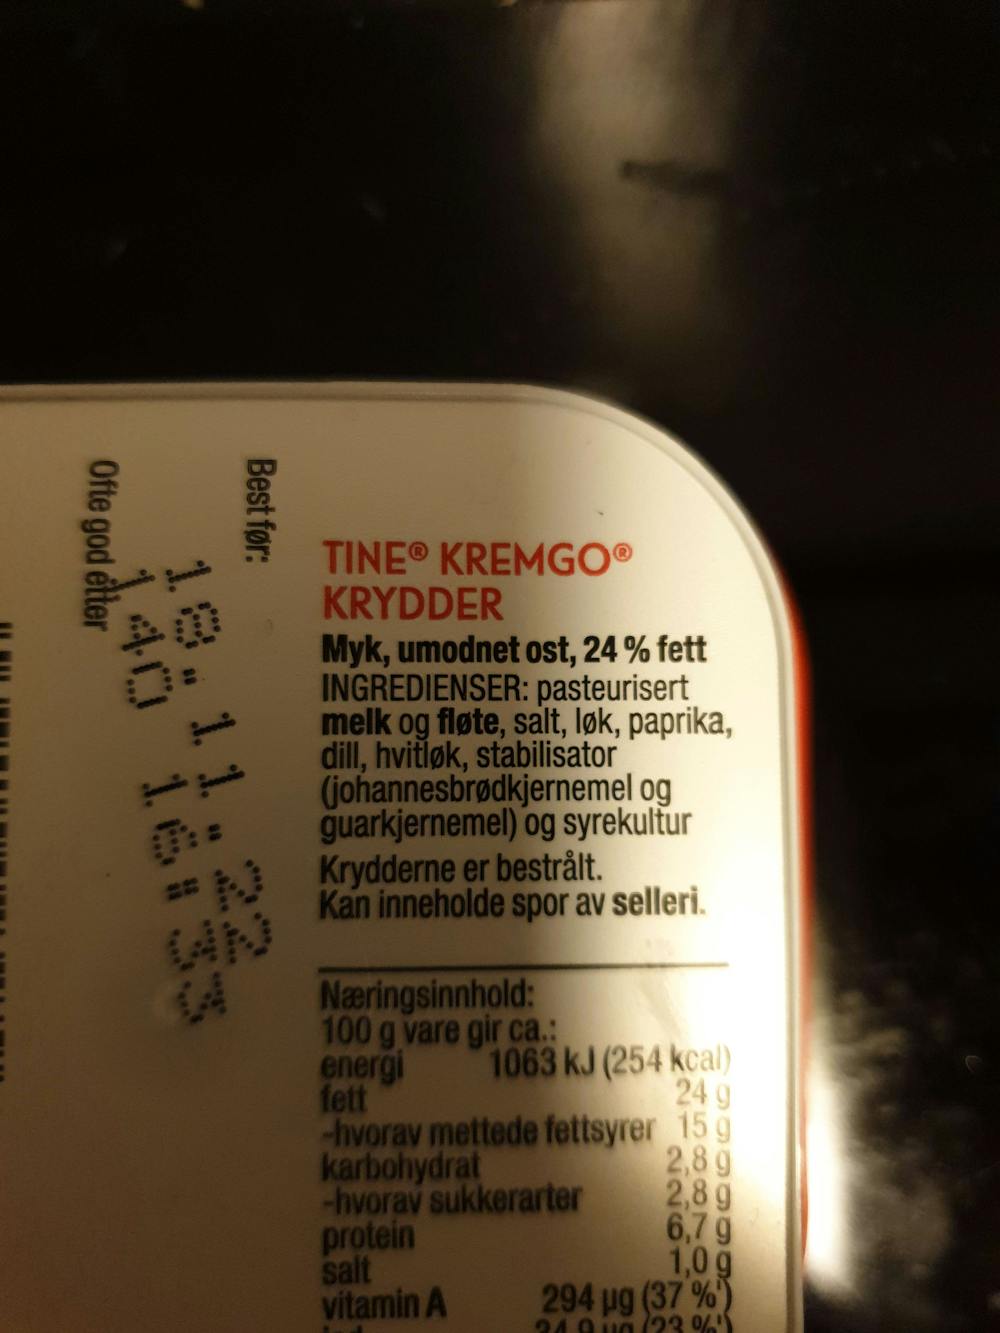 Ingrediensliste - Kremgo' krydder, TINE